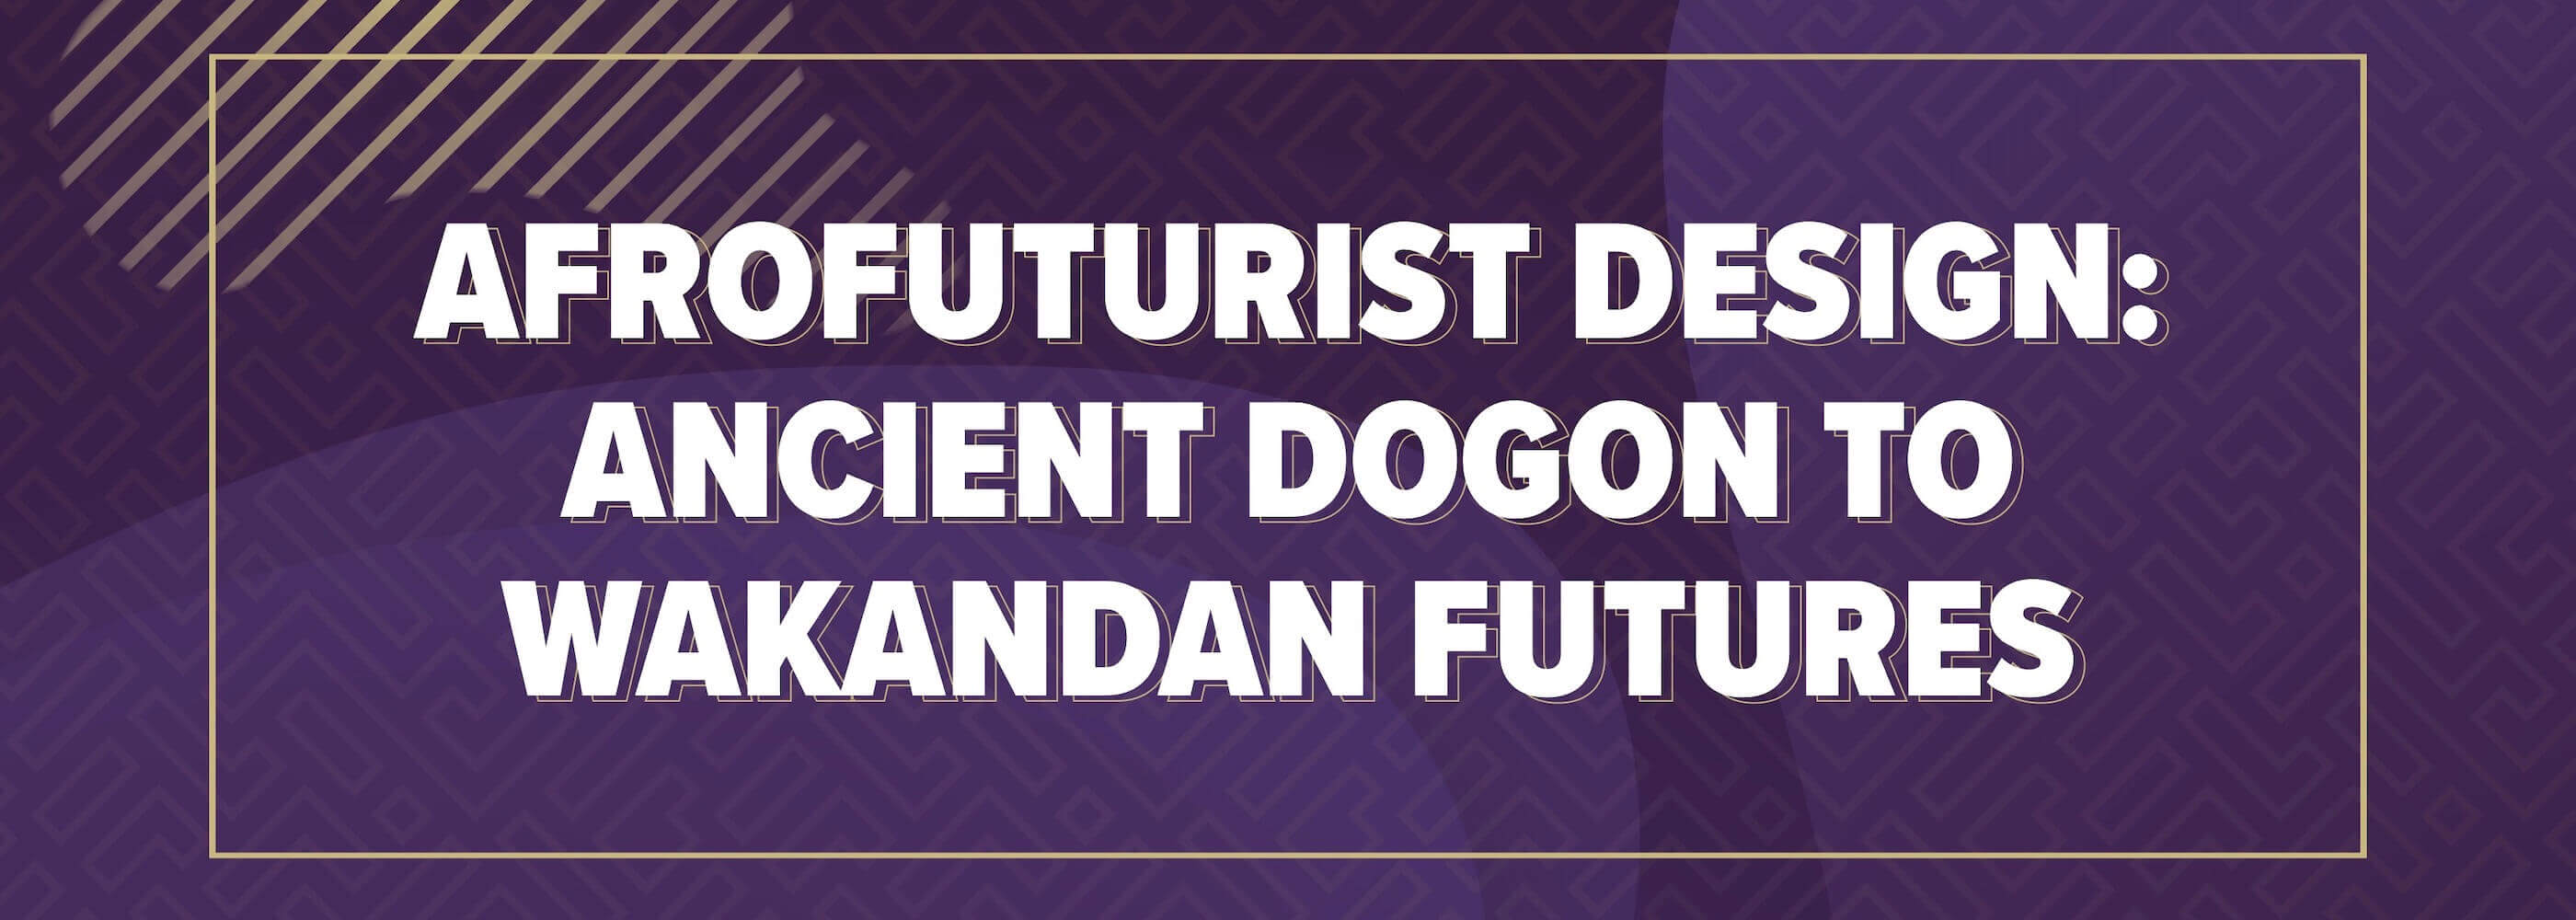 Afrofuturist Design: Ancient Dogon To Wakandan Futures - Multimedia Exhibits (Sept 7 - Nov 23)